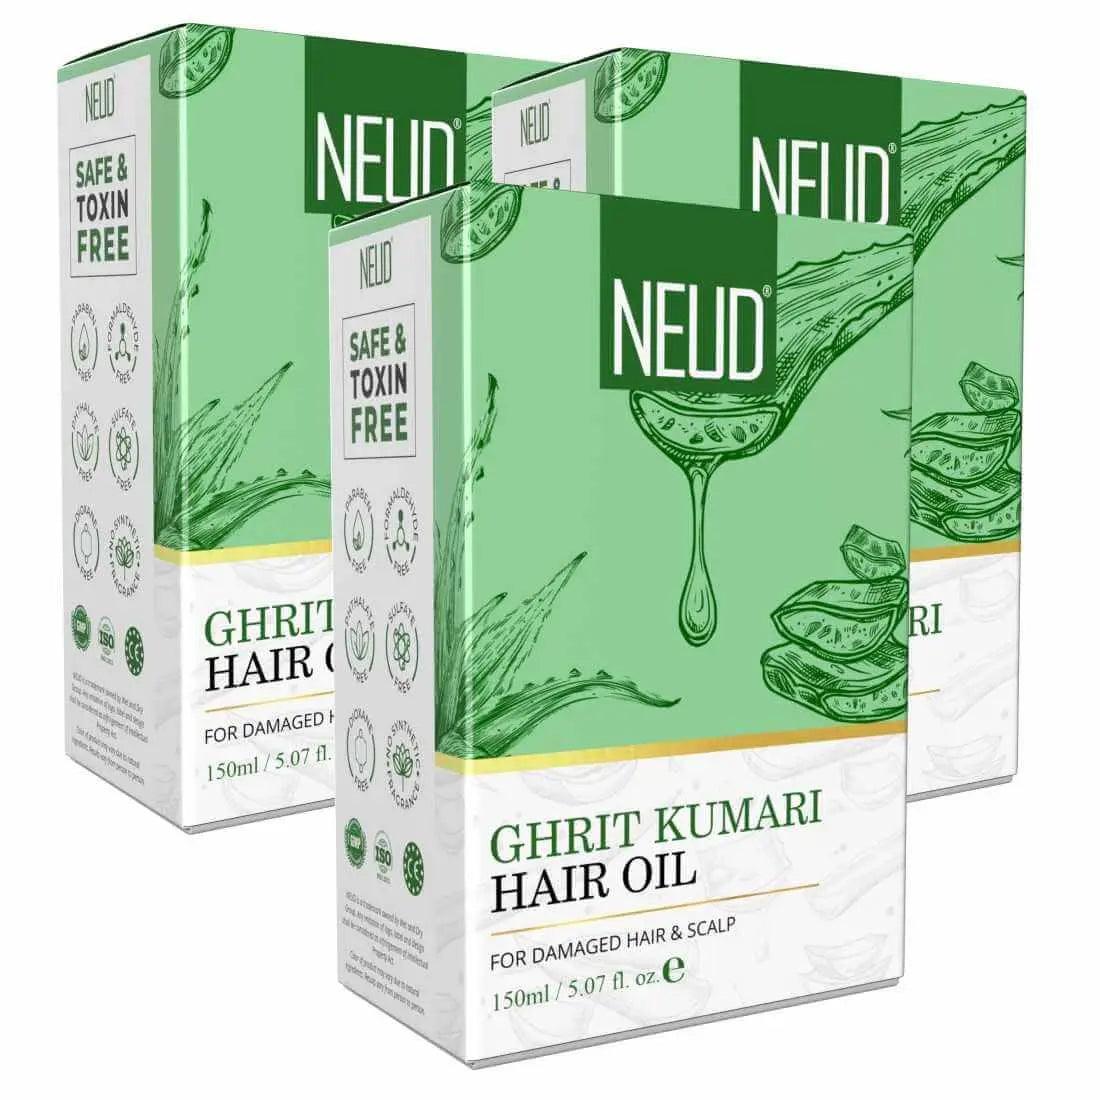 NEUD Premium Ghrit Kumari Hair Oil for Men & Women - 150 ml 9559682306272